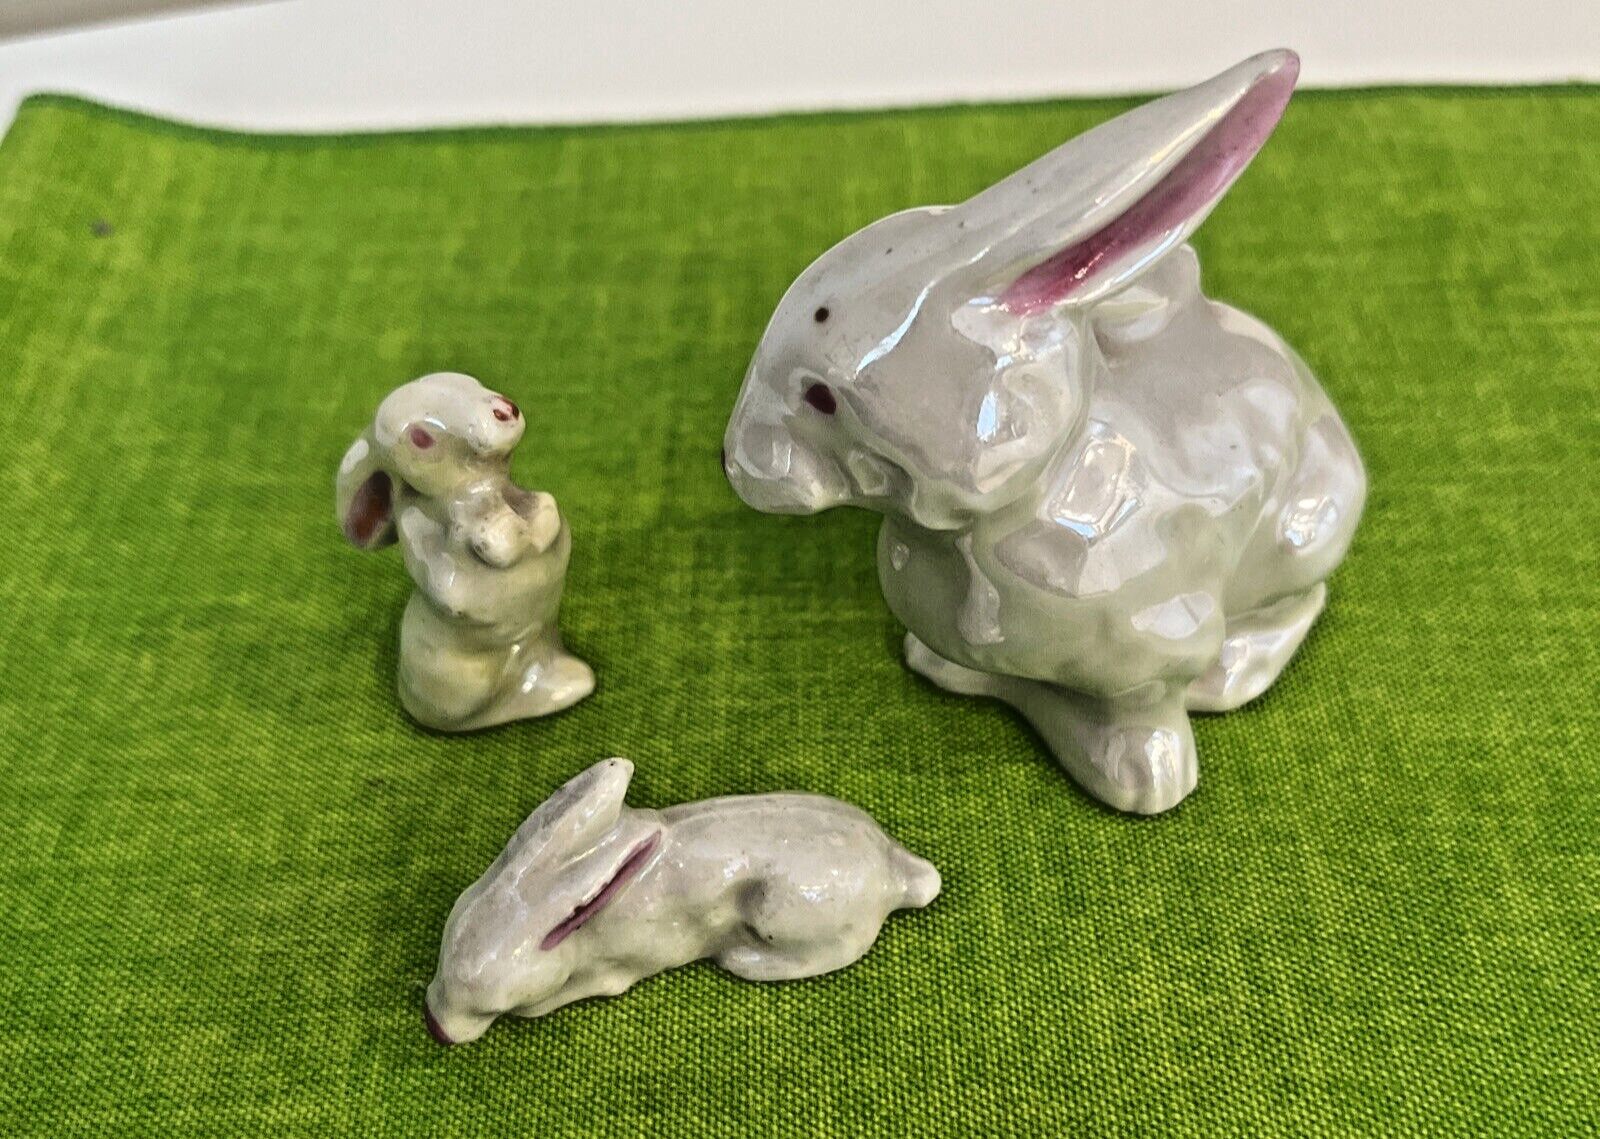 3 Bunny Rabbit Figures Small Glazed Porcelain Japan Decorative Bunny Family